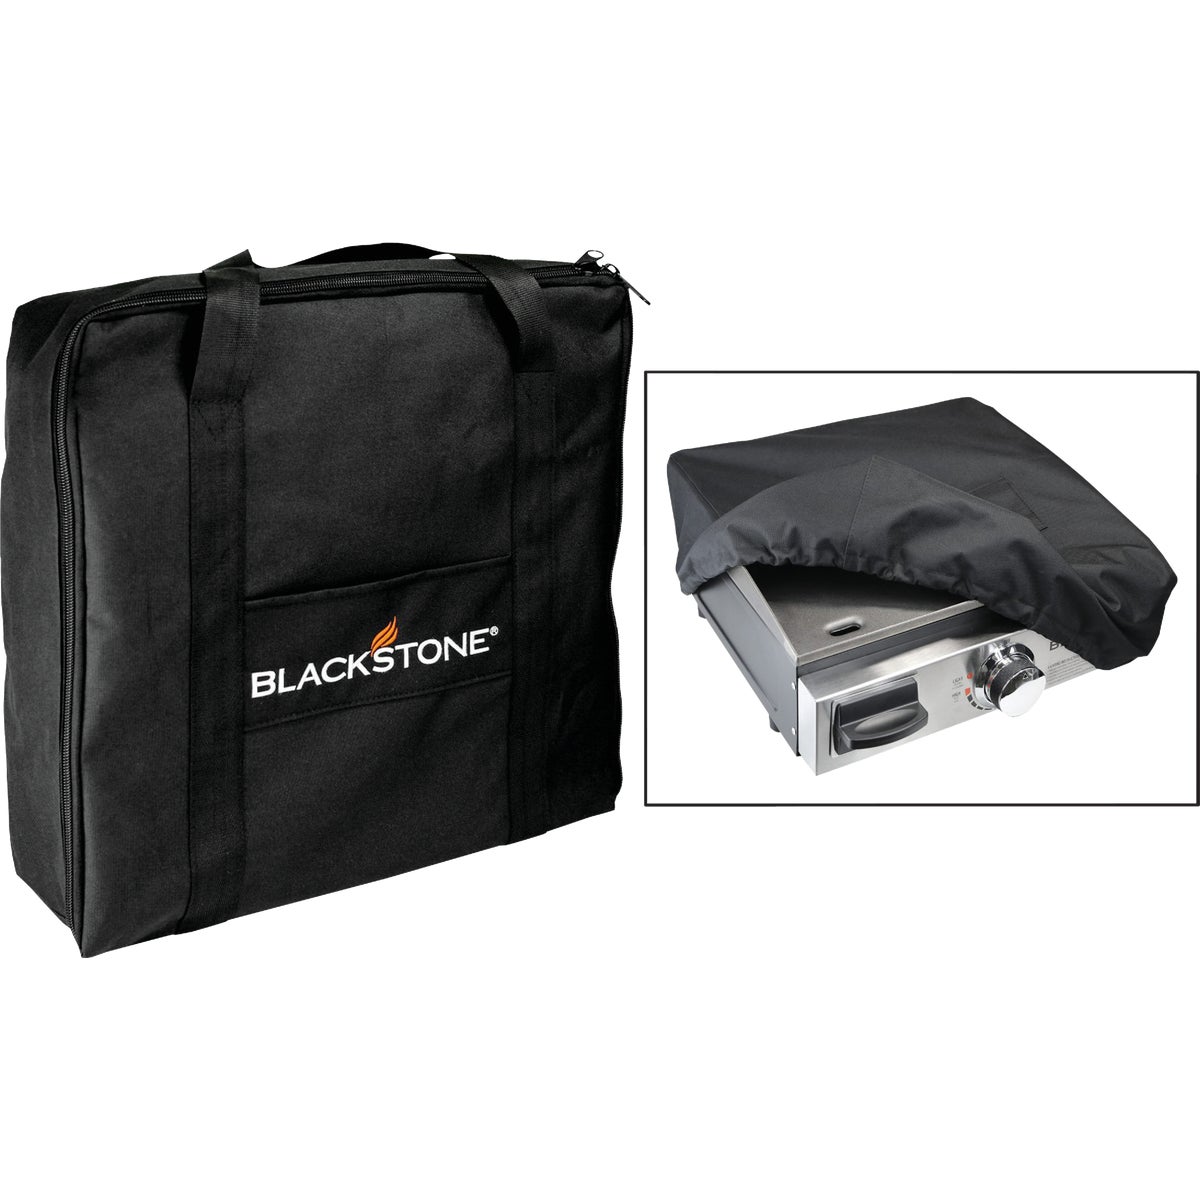 Item 800732, Blackstone Gas Griddle Cover &amp; Carry Bag Set is custom designed to fit 